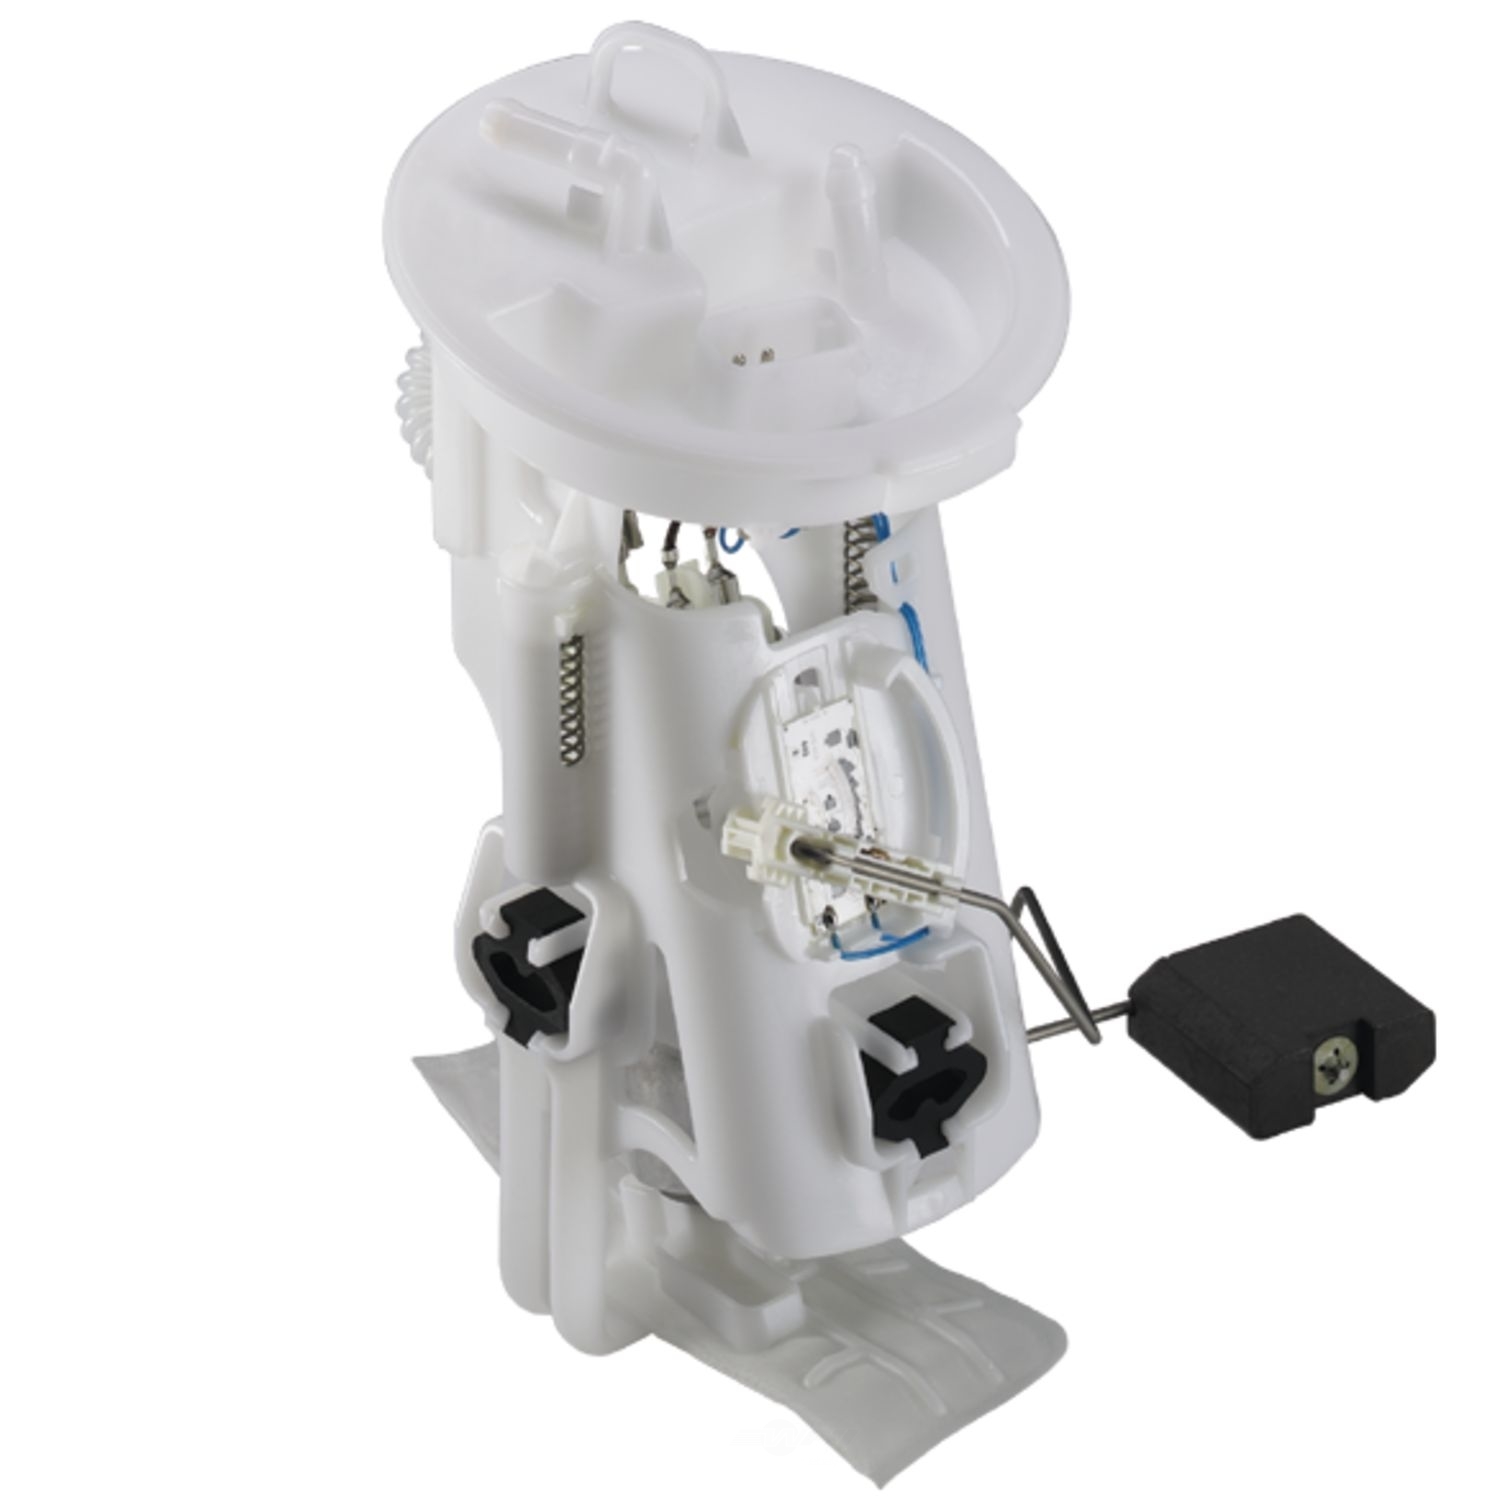 VDO - Fuel Pump Module Assembly - SIE 228-222-009-002Z